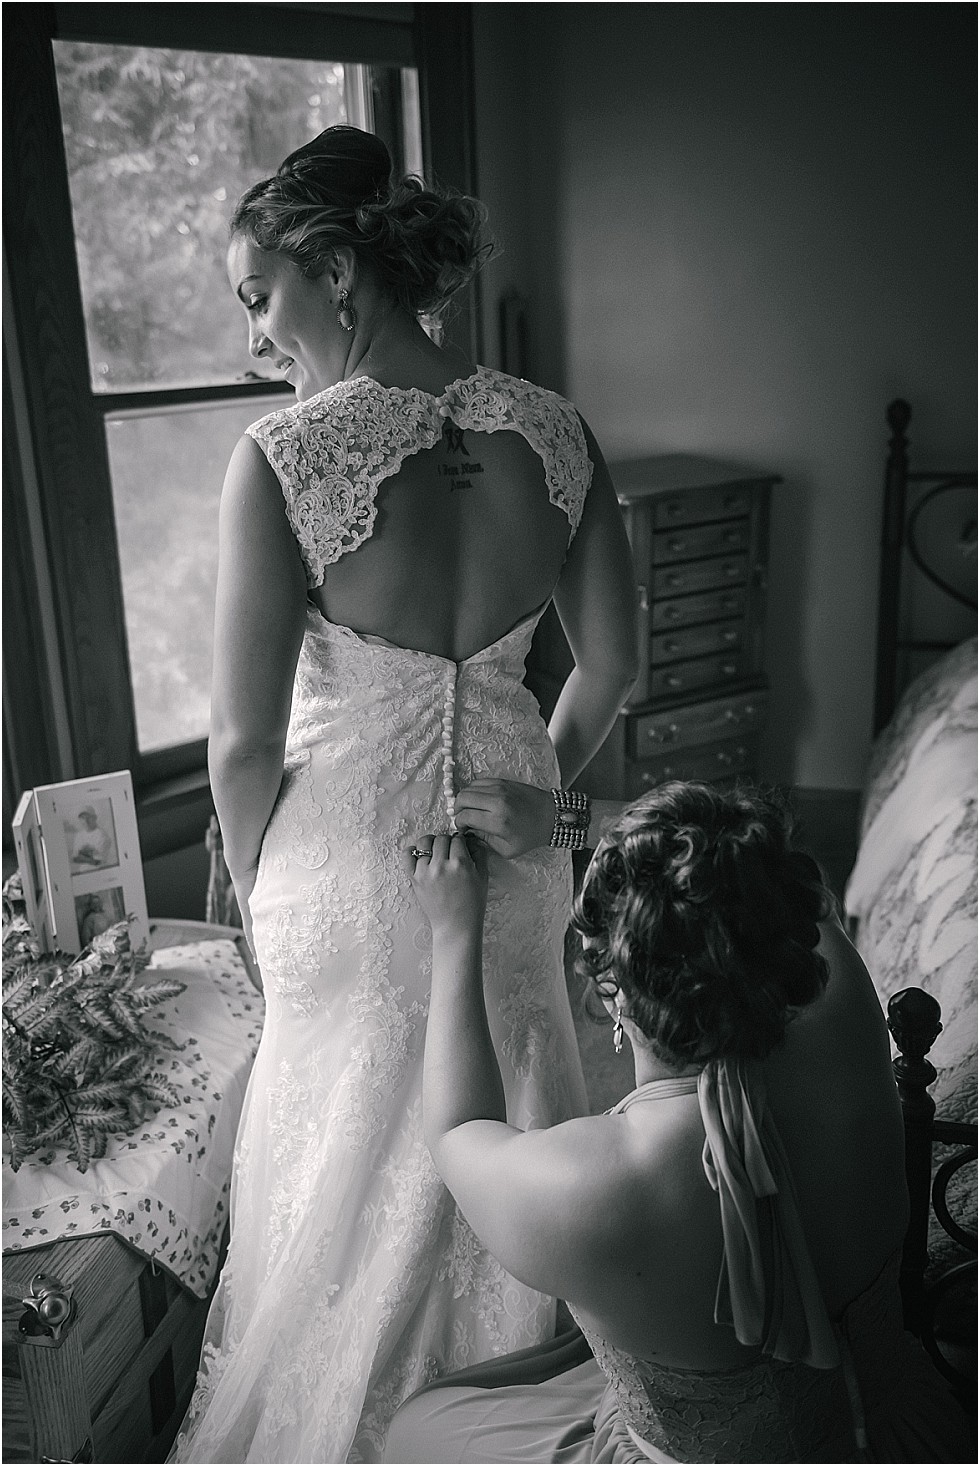 sister helping bride get into wedding dress